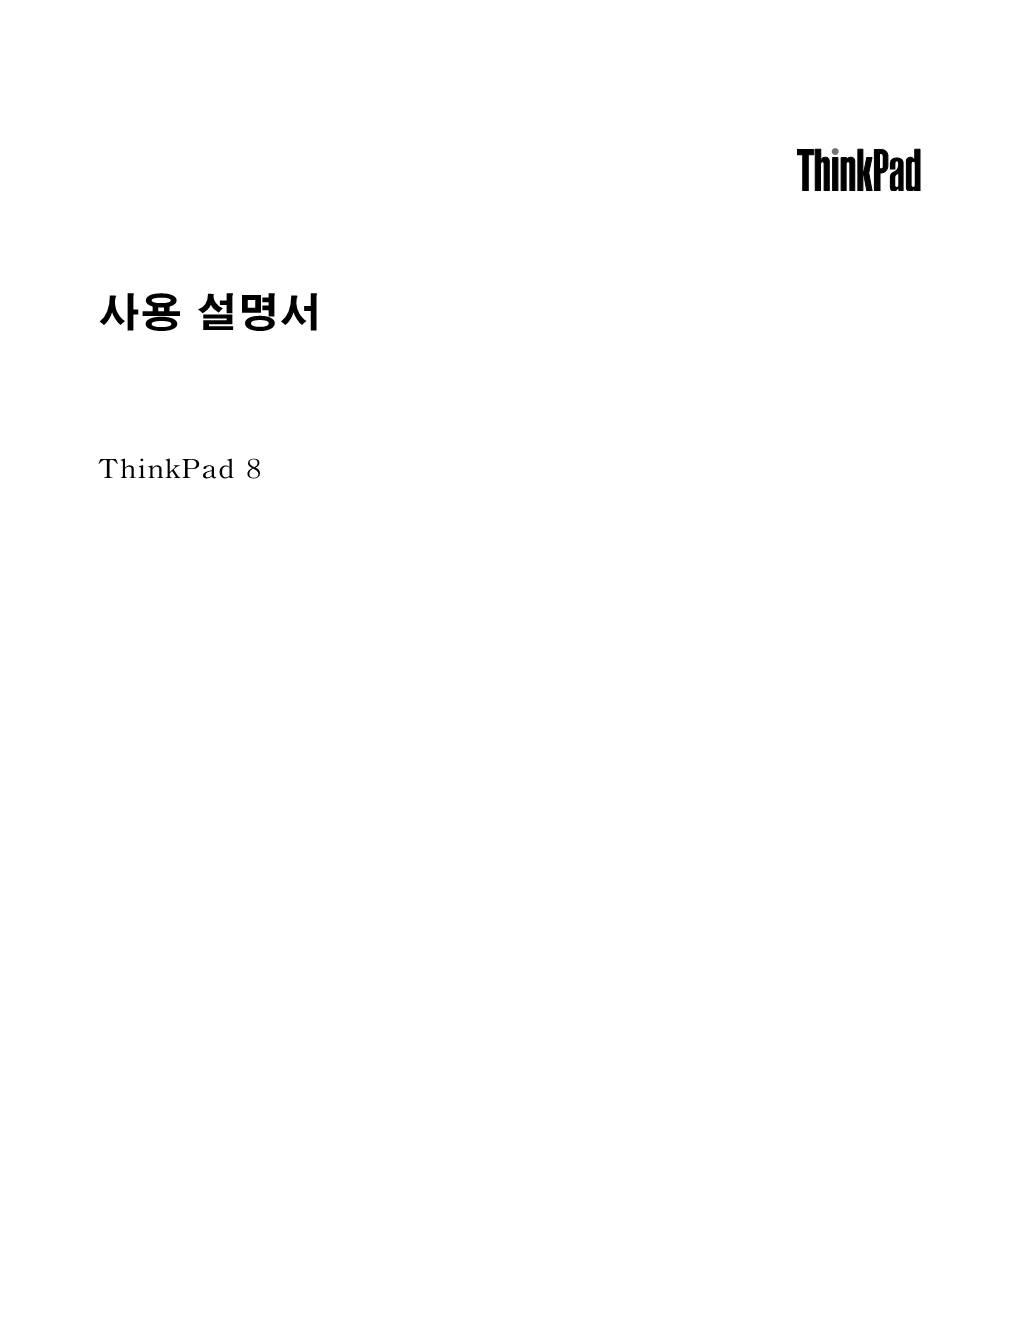 Lenovo Thinkpad 8 Ug Ko (Korean) User Guide